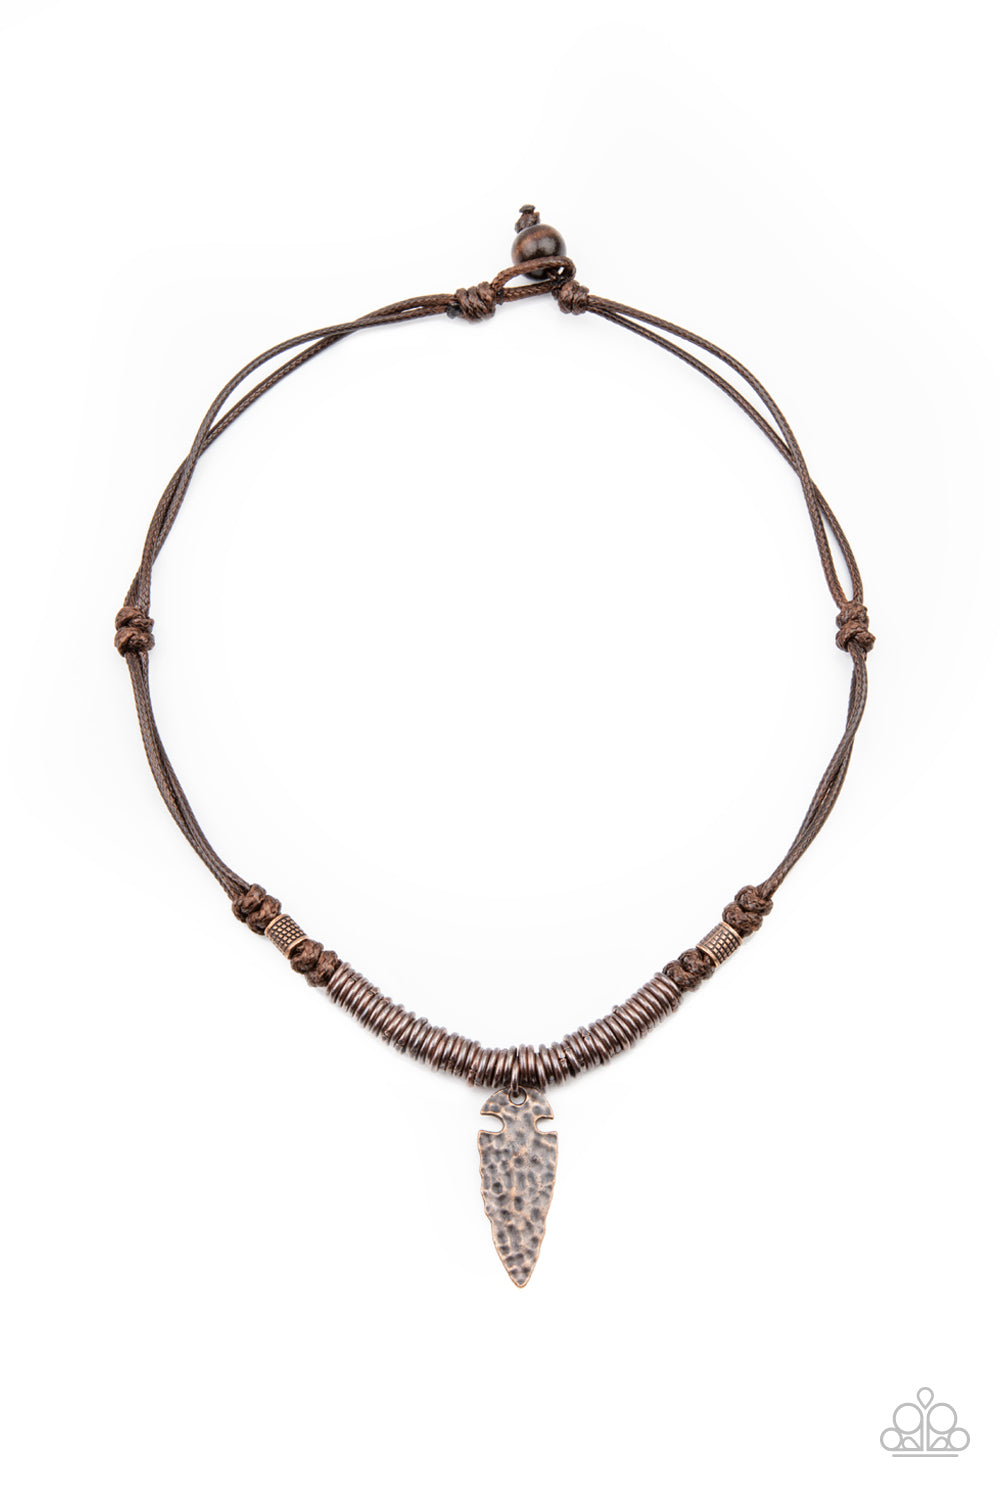 Rush In ARROWHEAD-First Copper Necklace freeshipping - JewLz4u Gemstone Gallery